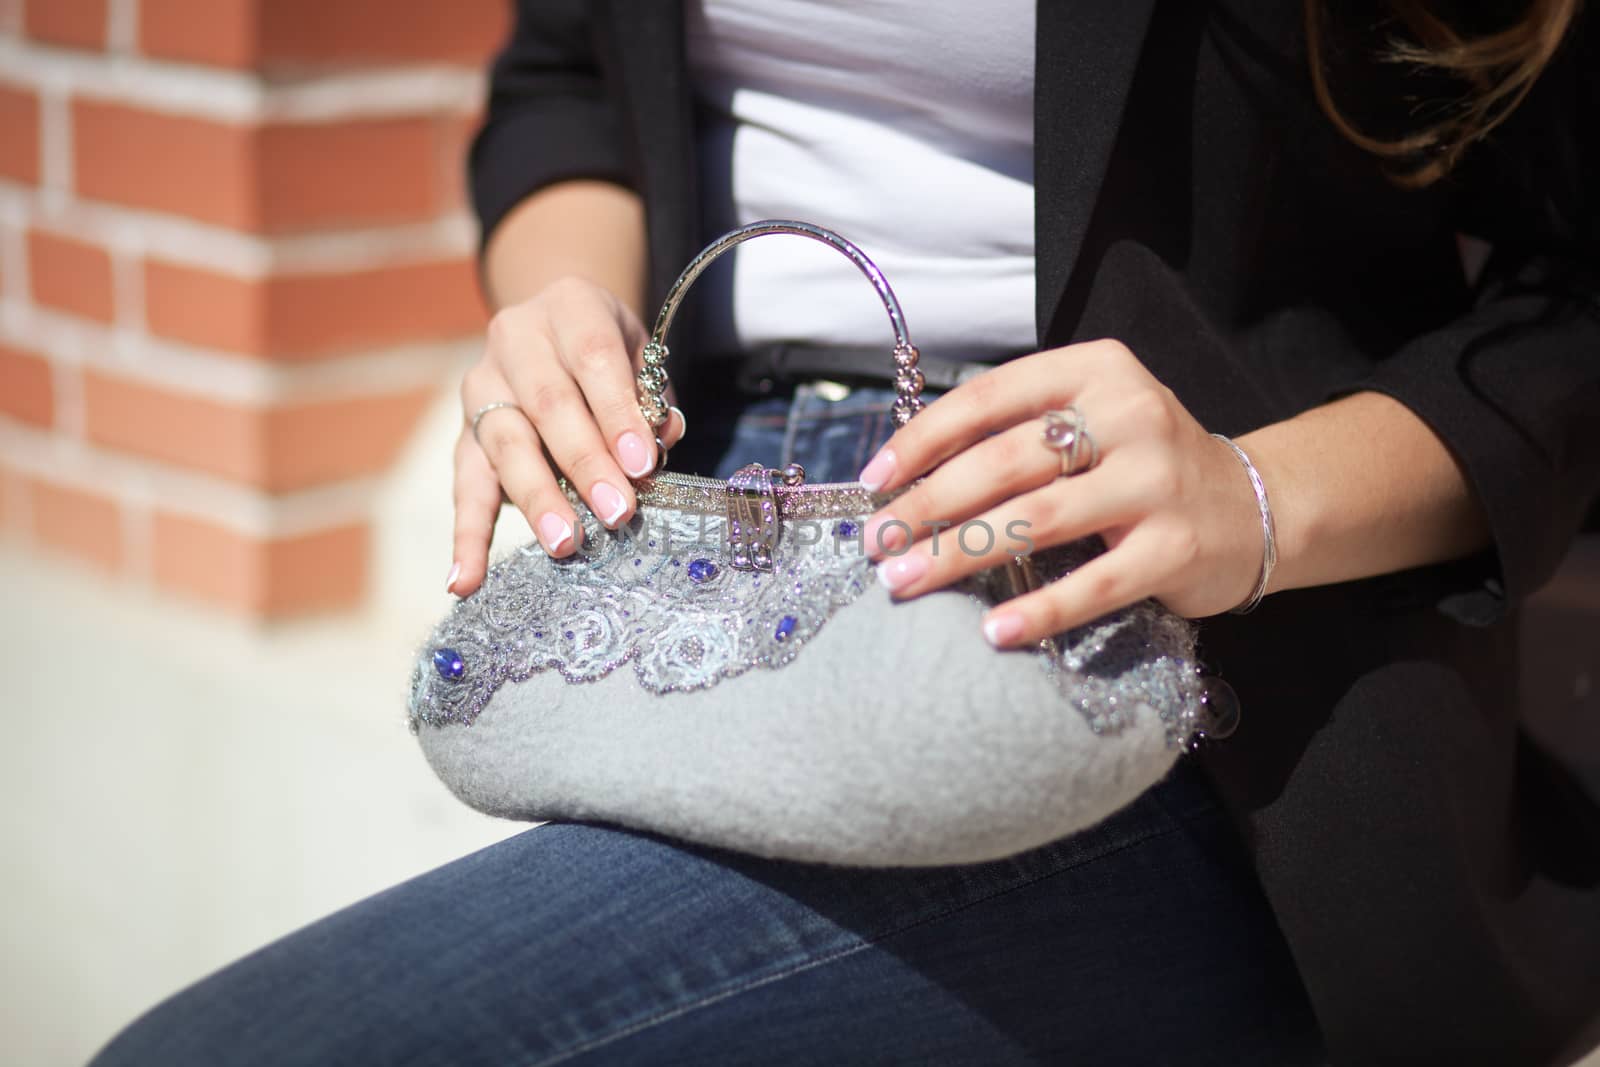 gray Elegant Felting wool fashion handmade handbag in hand. street fashion look